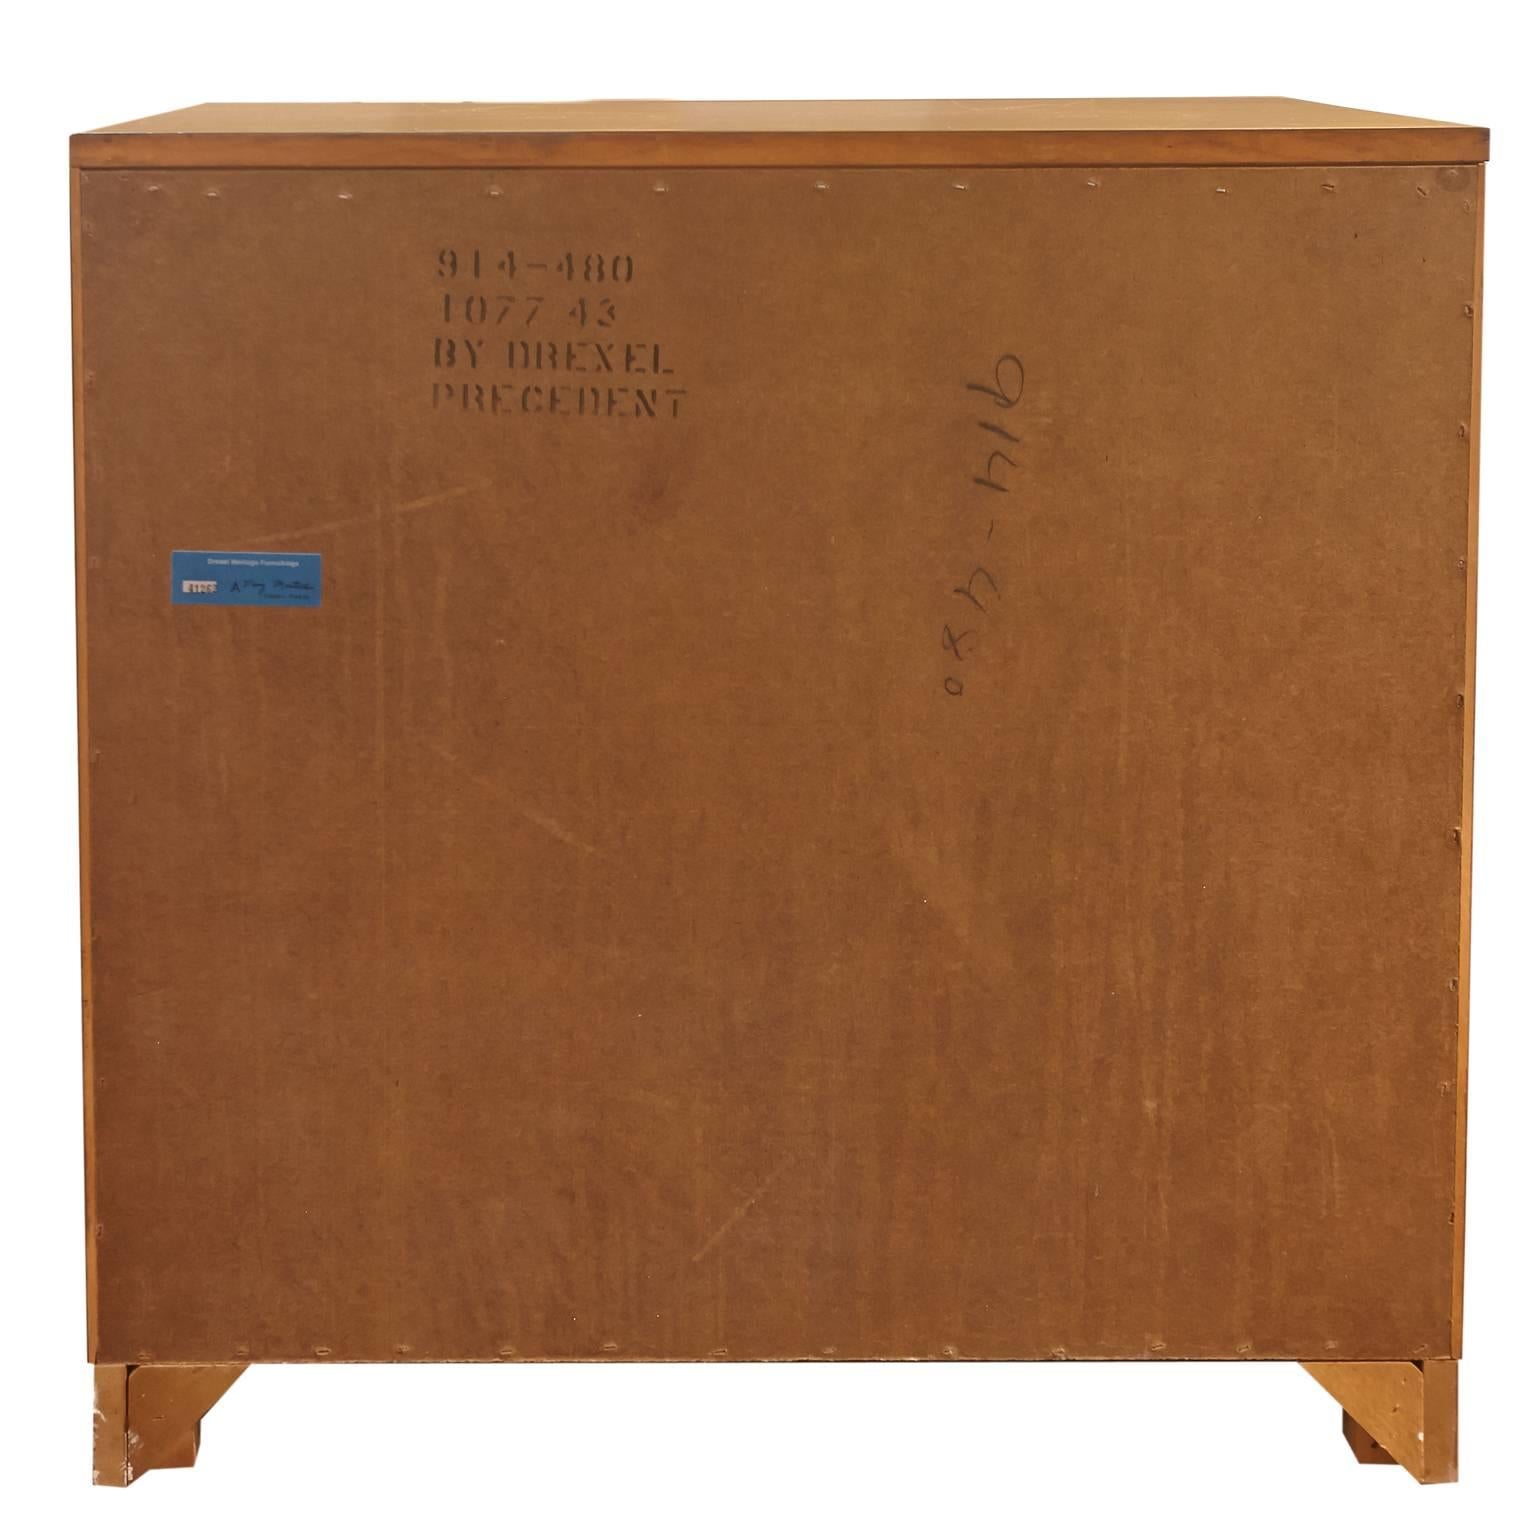 Veneer Pair of Edward Wormley Burl Wood Cabinets for Drexel Precedent